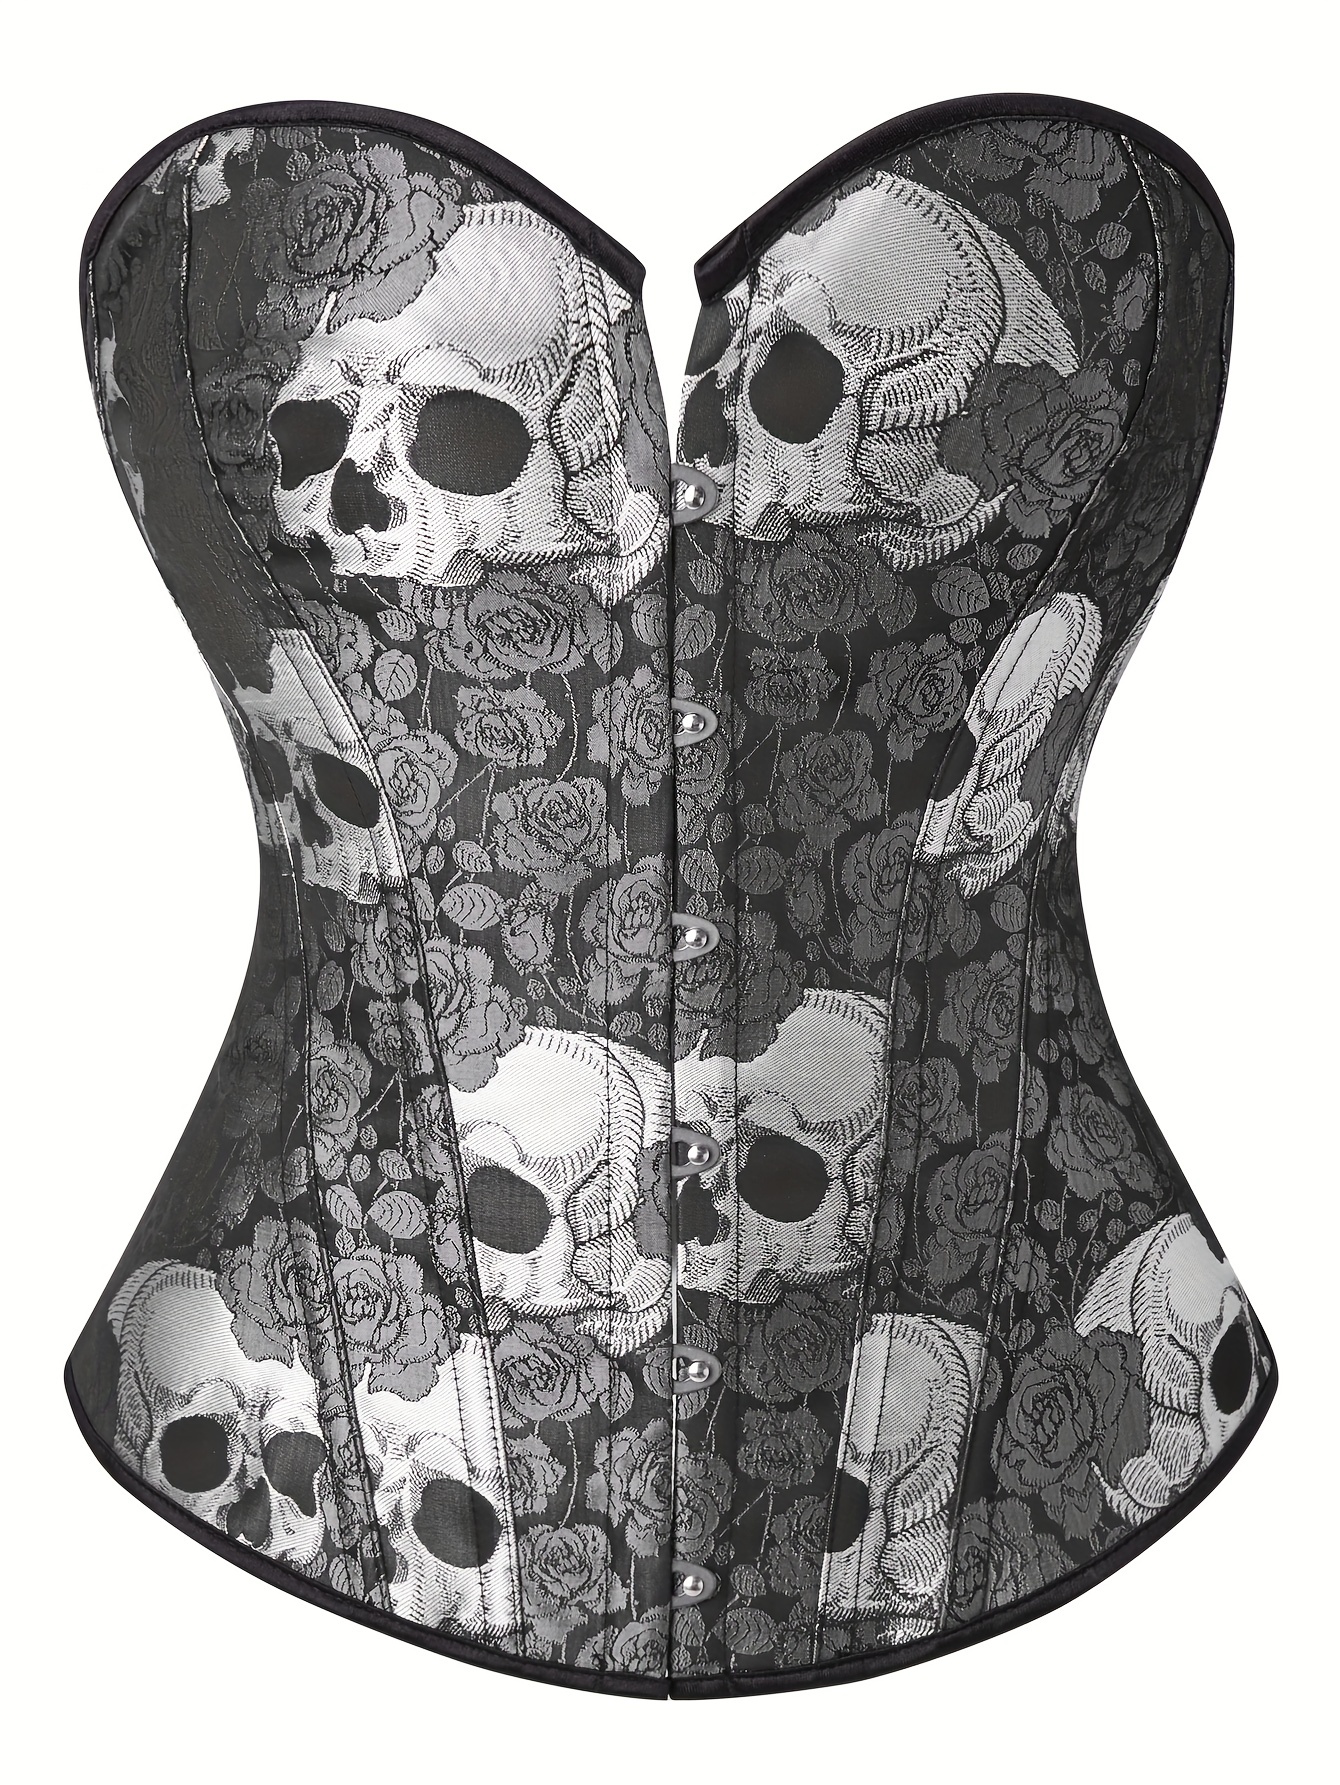 Steampunk Overbust Corset Women Gothic Skull Print Corsets Bustiers  Lingerie Top Plus Size Korsett Body Shaper Clubwear S-6XL